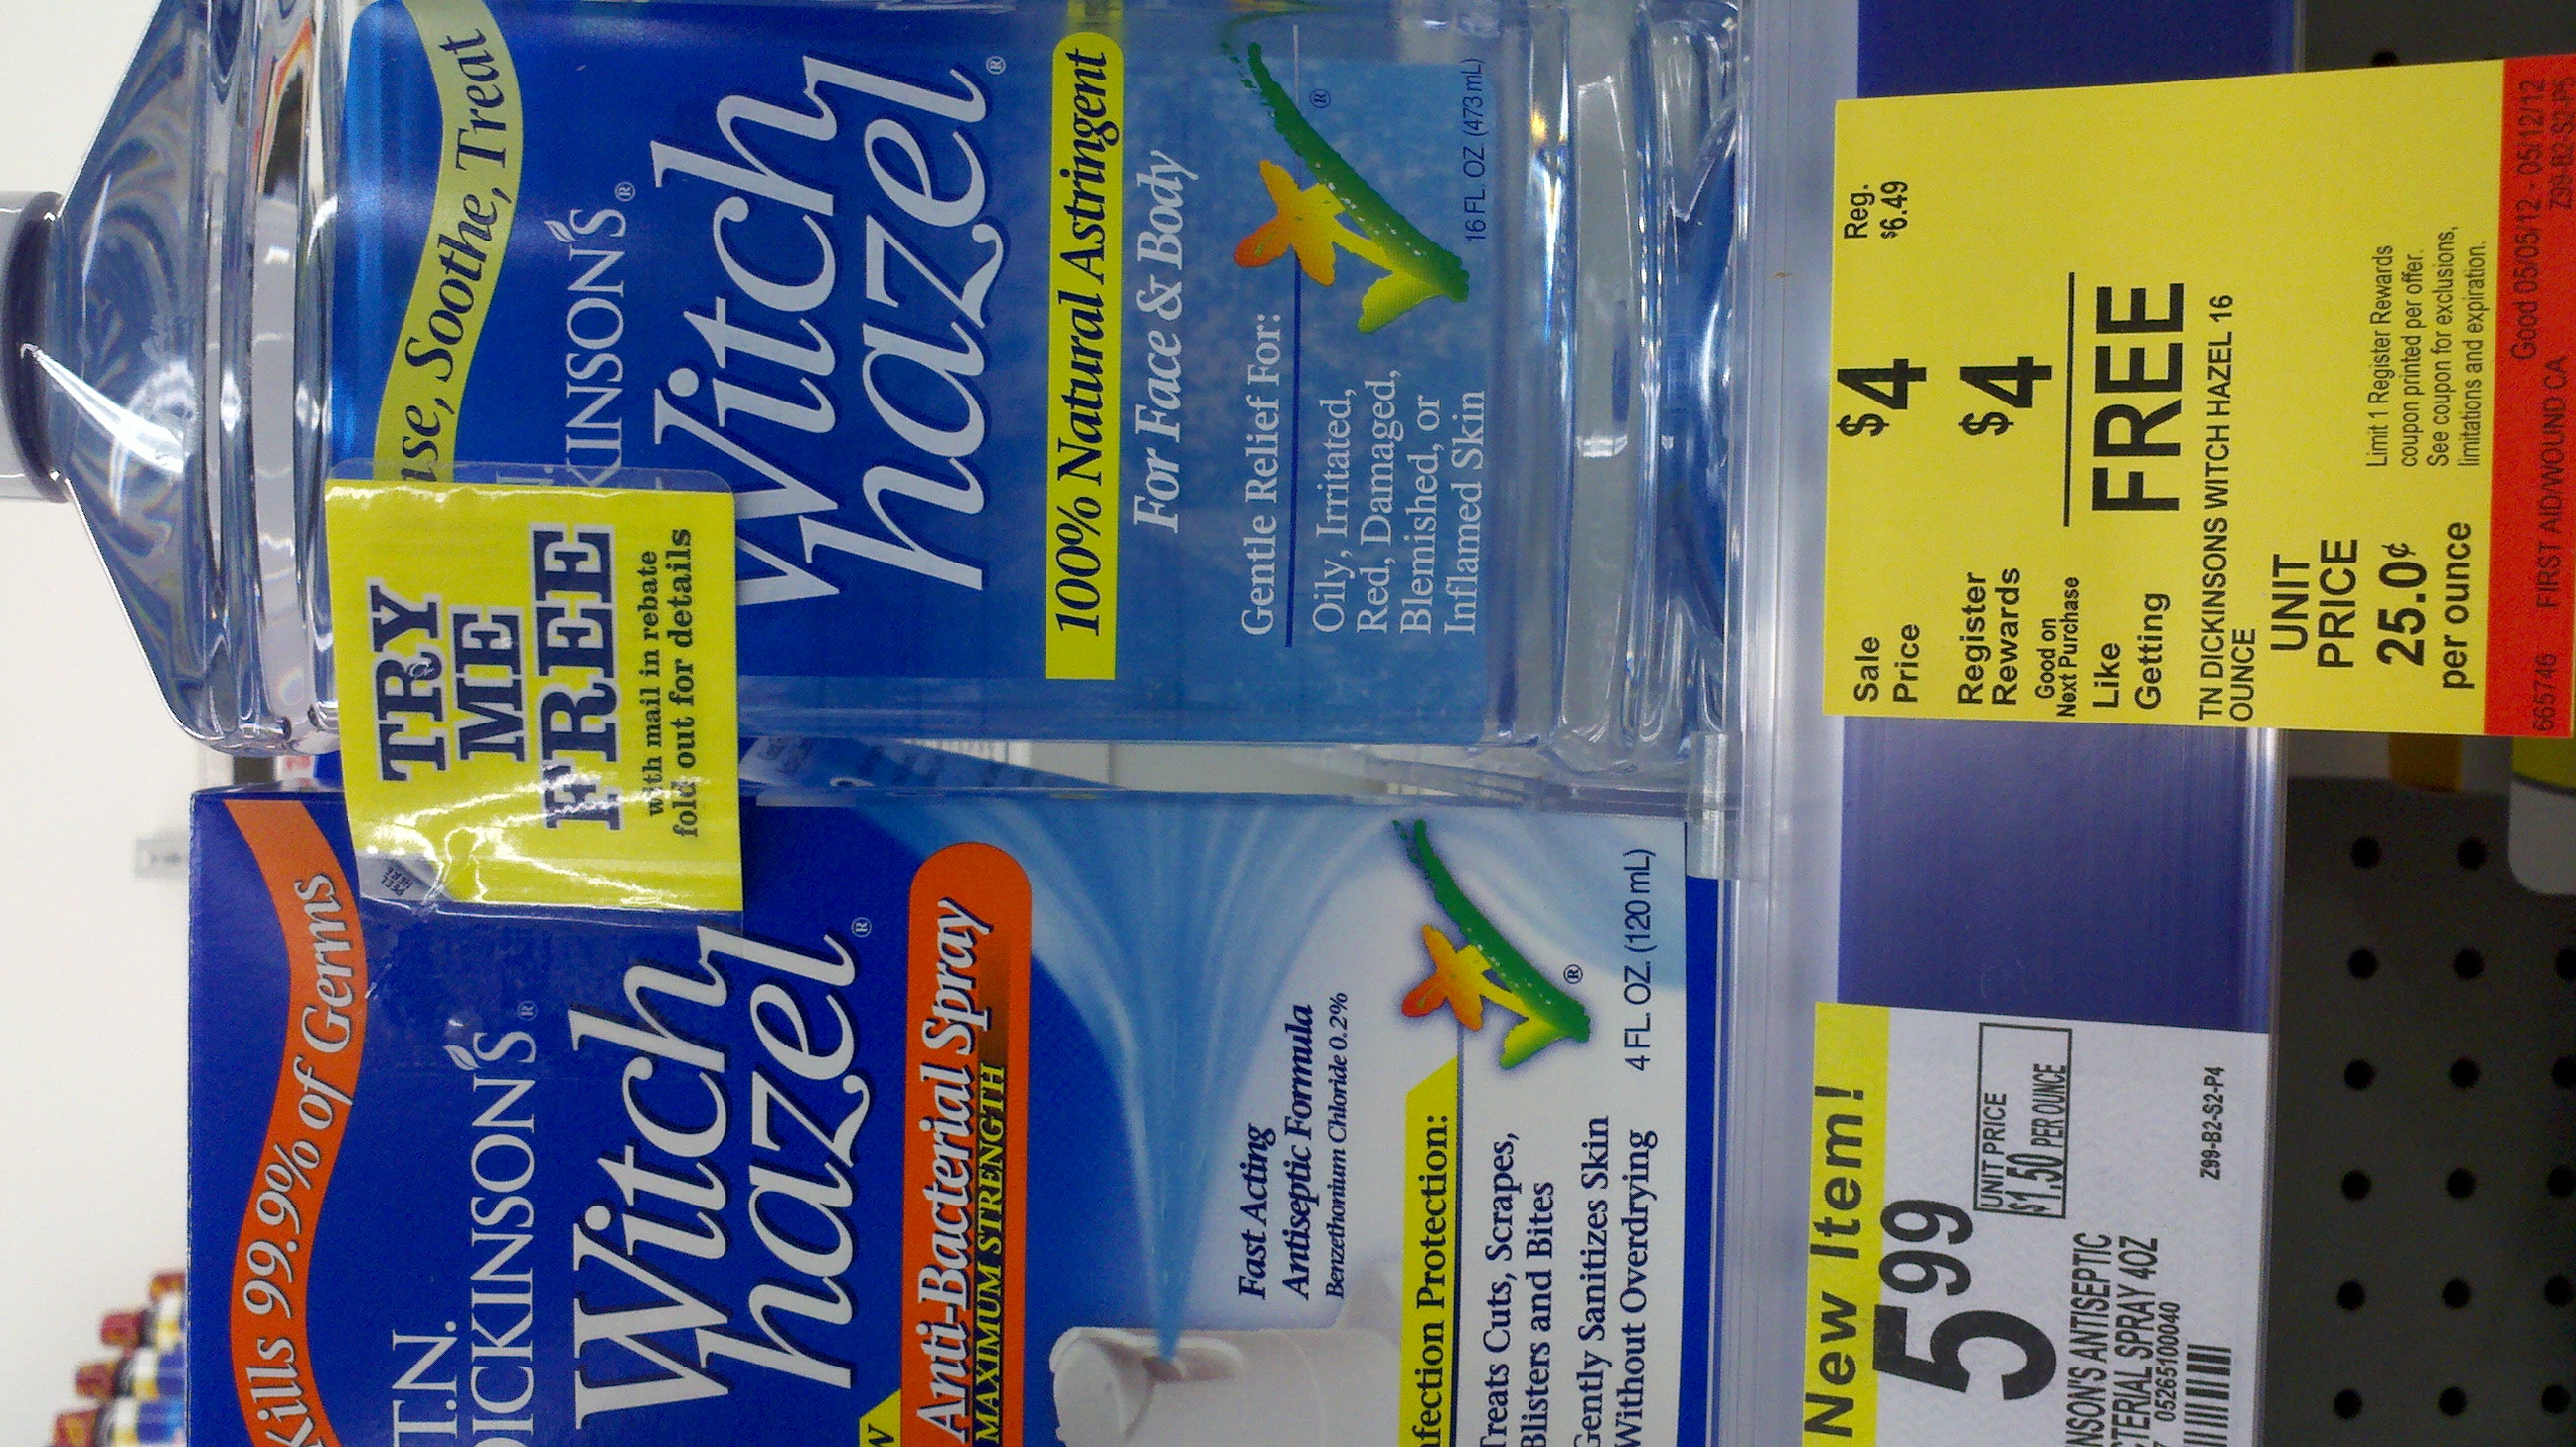 walgreens-haul-10-18-24-2020-i-2-pampers-diapers-i-6-ibotta-rebates-i